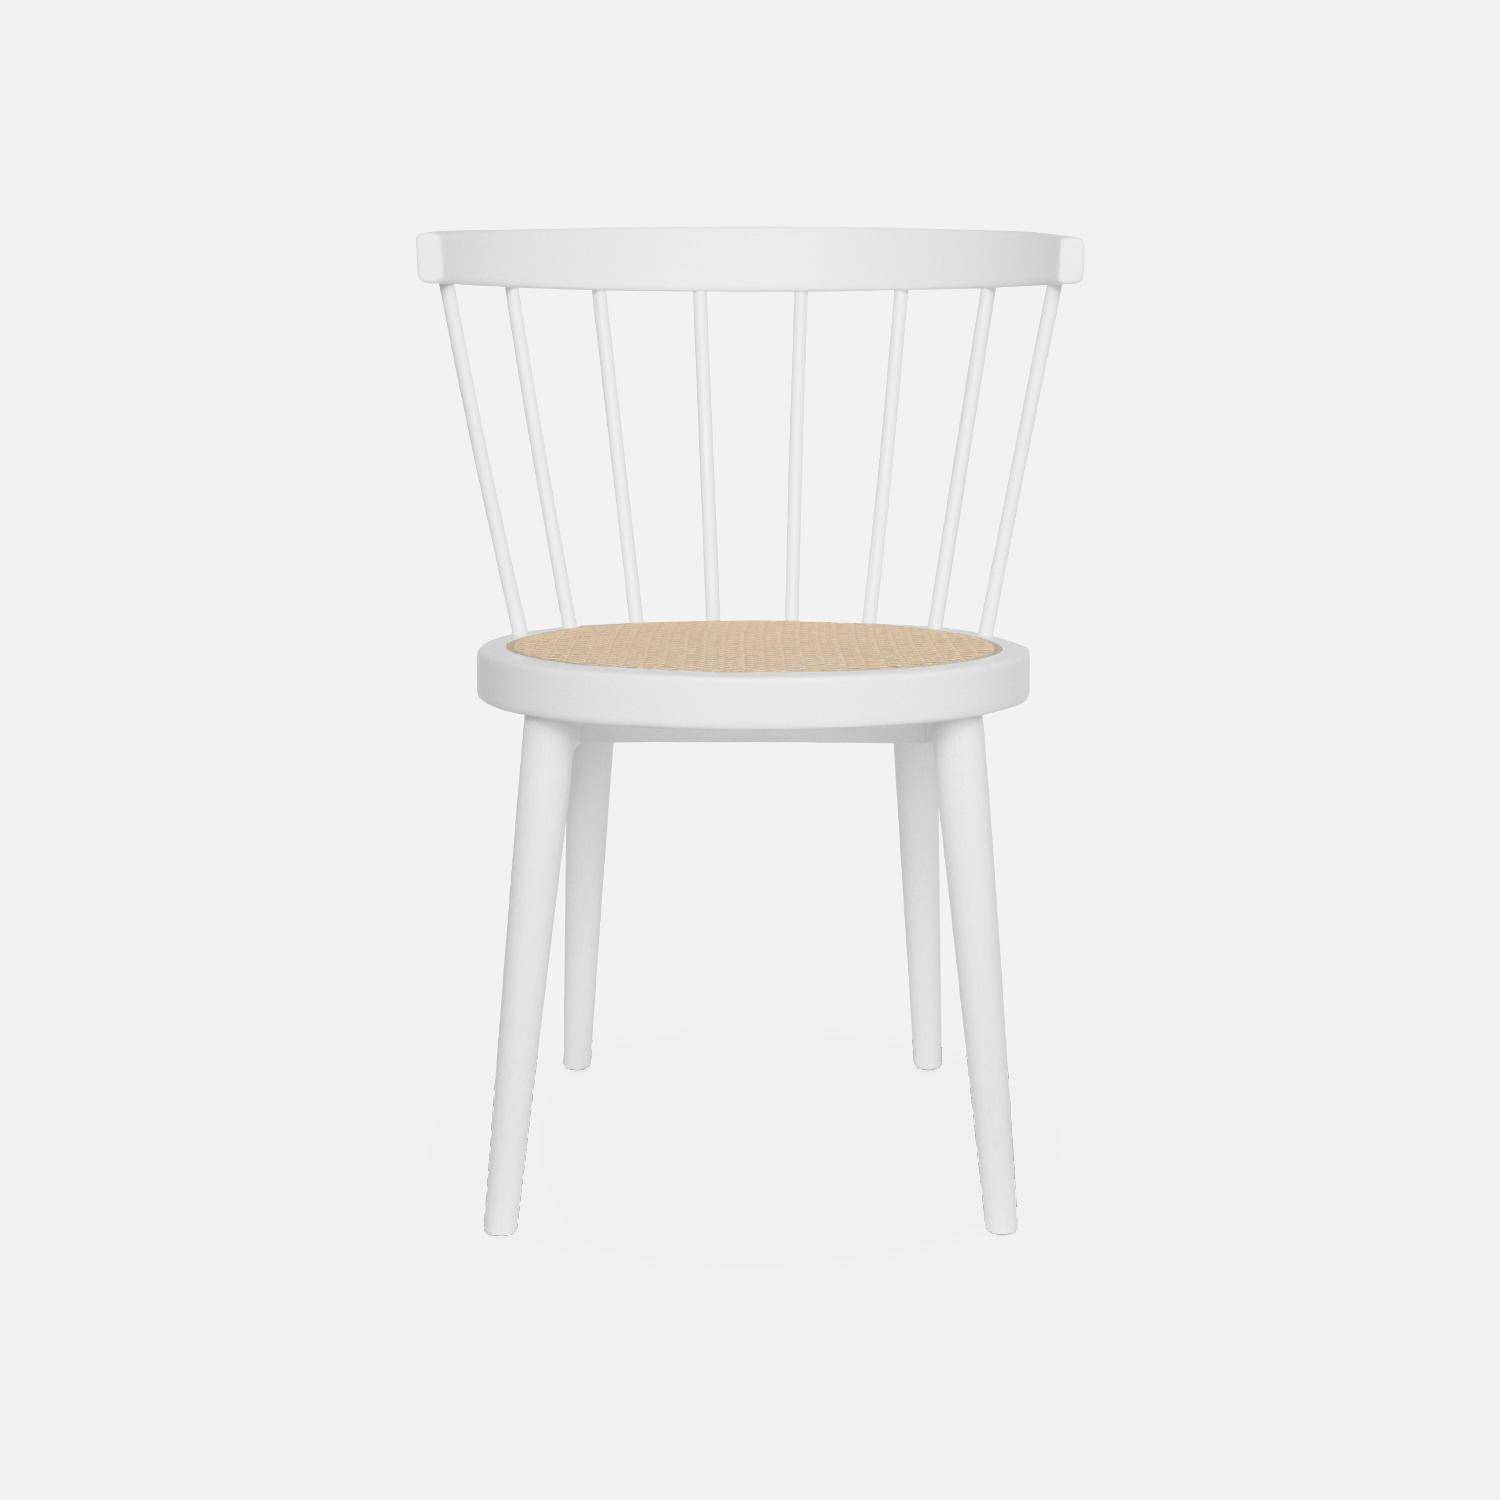 Pair of  Wood and Cane Chairs, Bohemian Spirit, White, L53 x W53.5 x H 6 cm,sweeek,Photo5